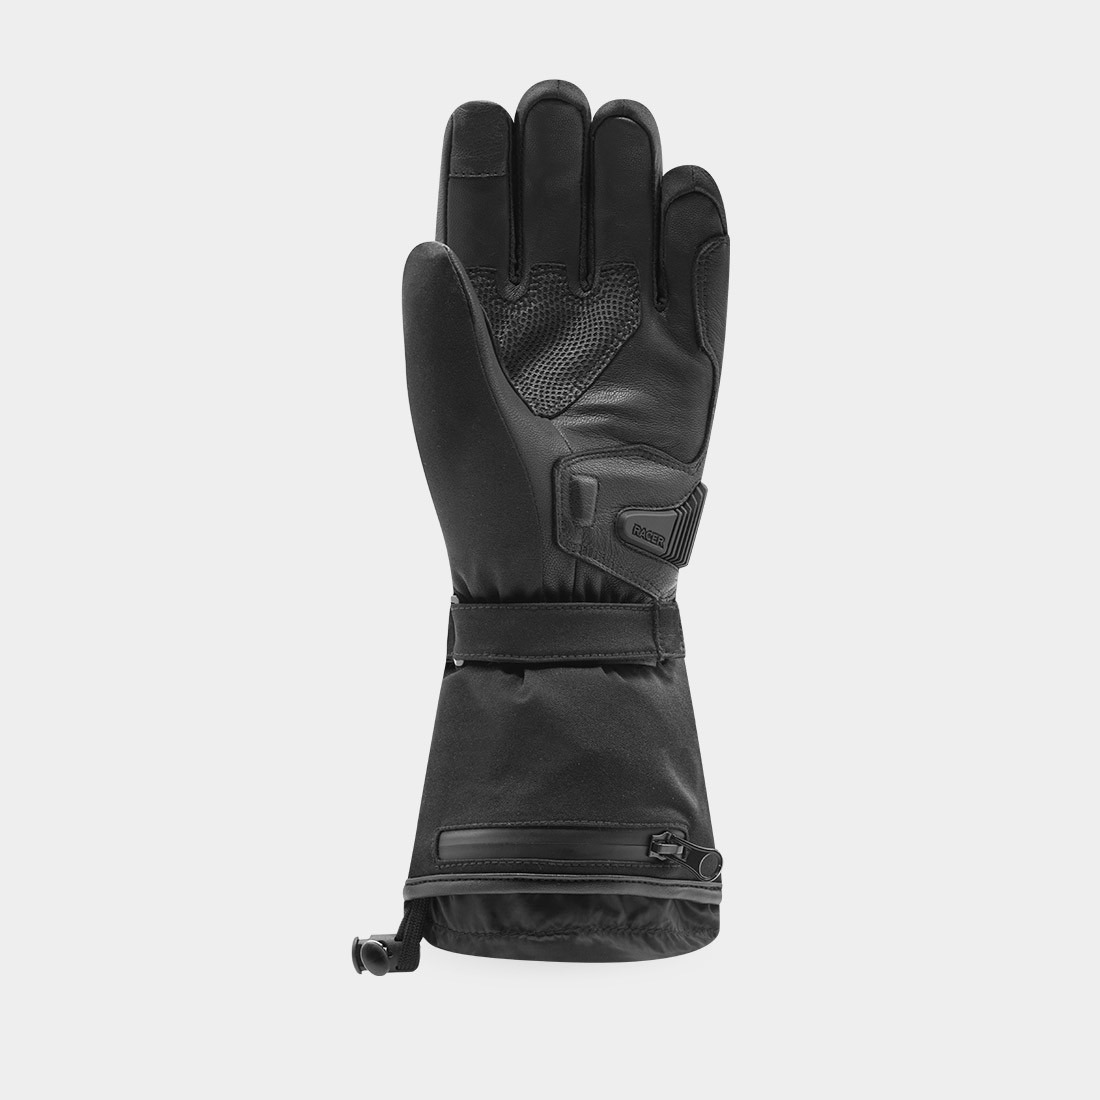 heated gloves HEAT5, RACER (black)